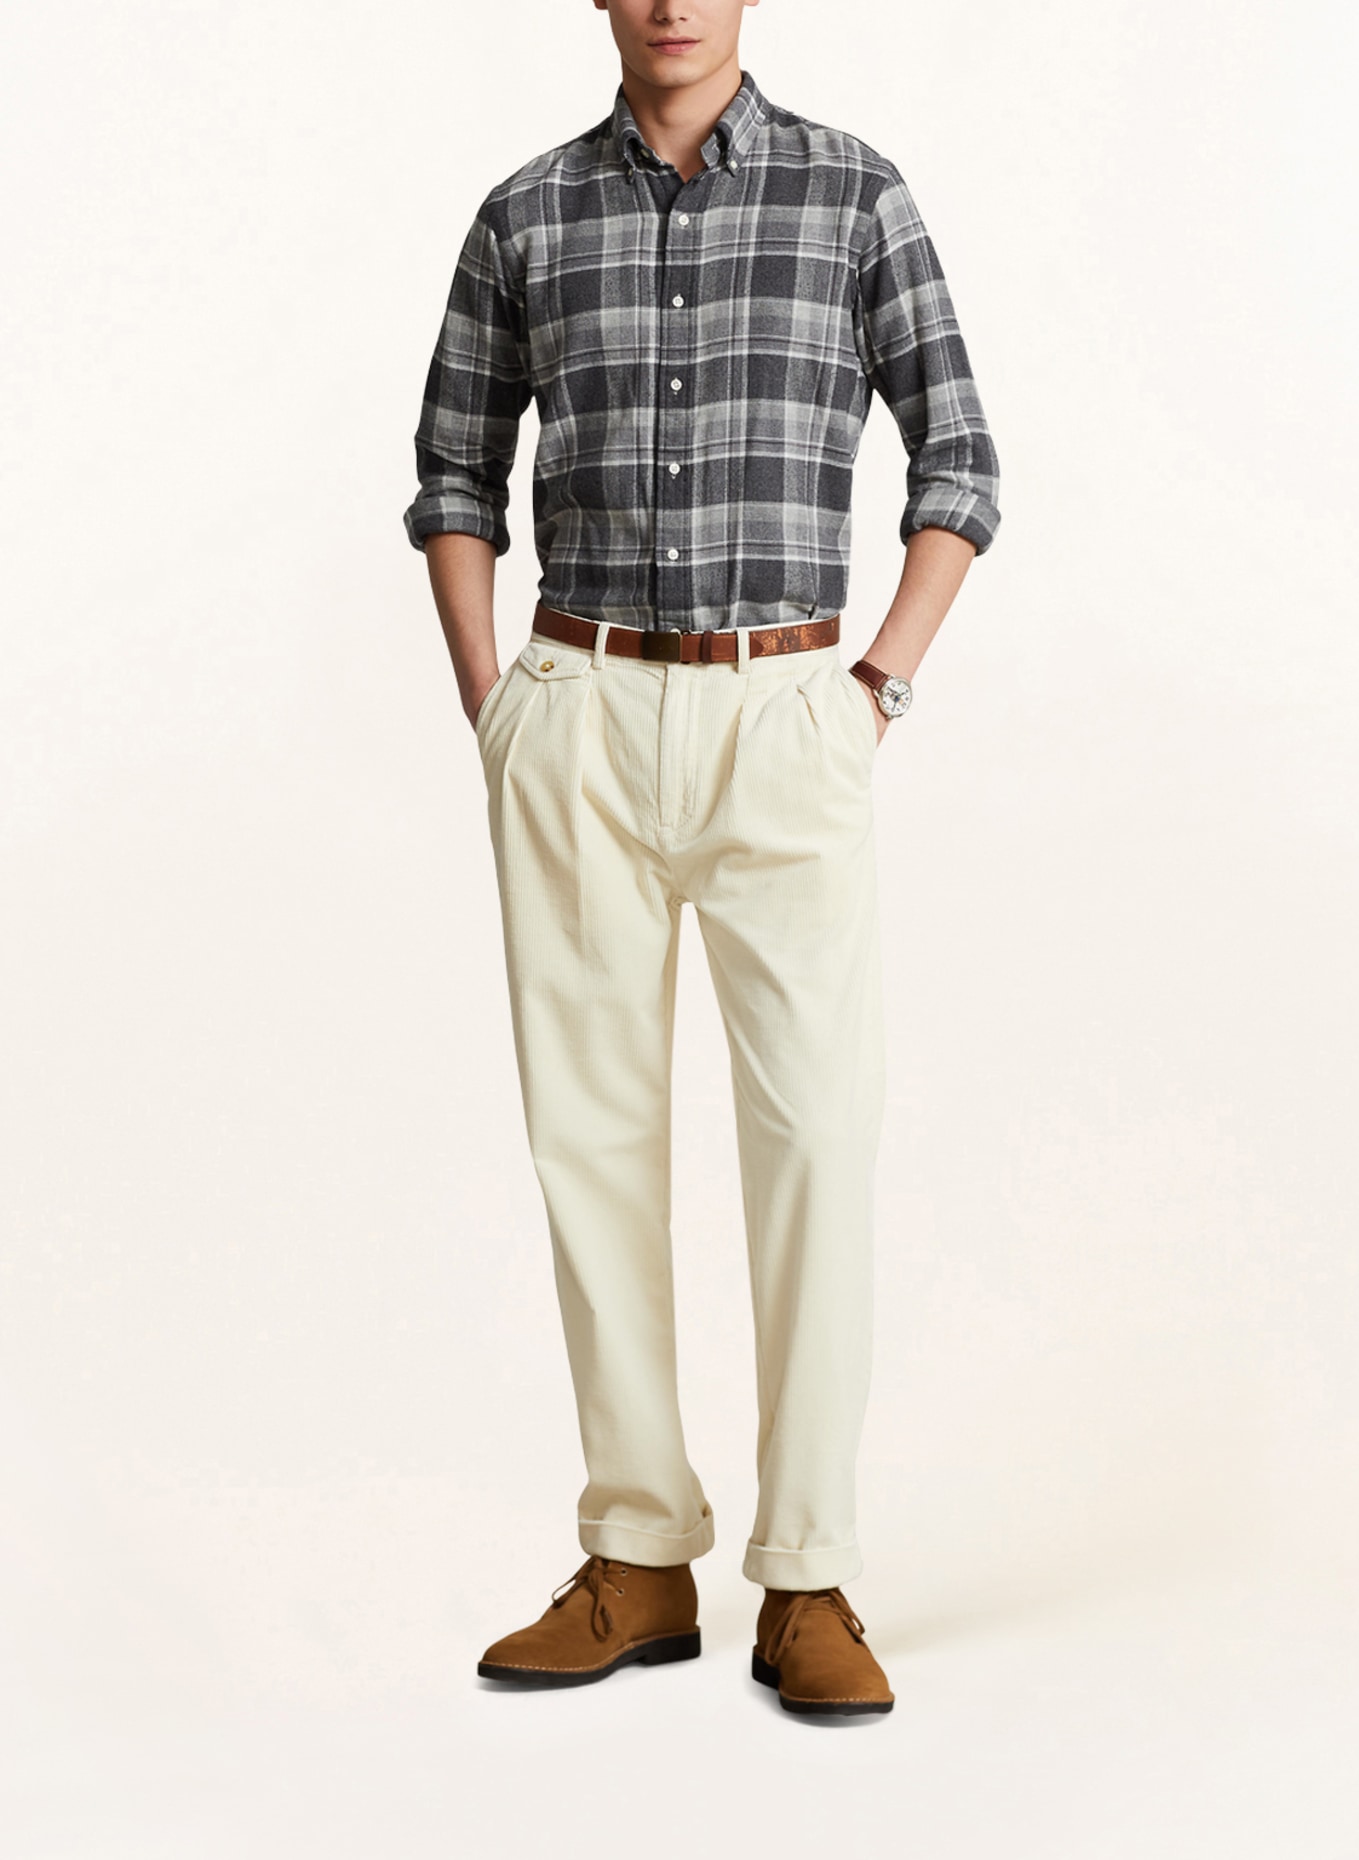 POLO RALPH LAUREN Flannel shirt classic fit, Color: GRAY/ DARK GRAY/ LIGHT GRAY (Image 2)